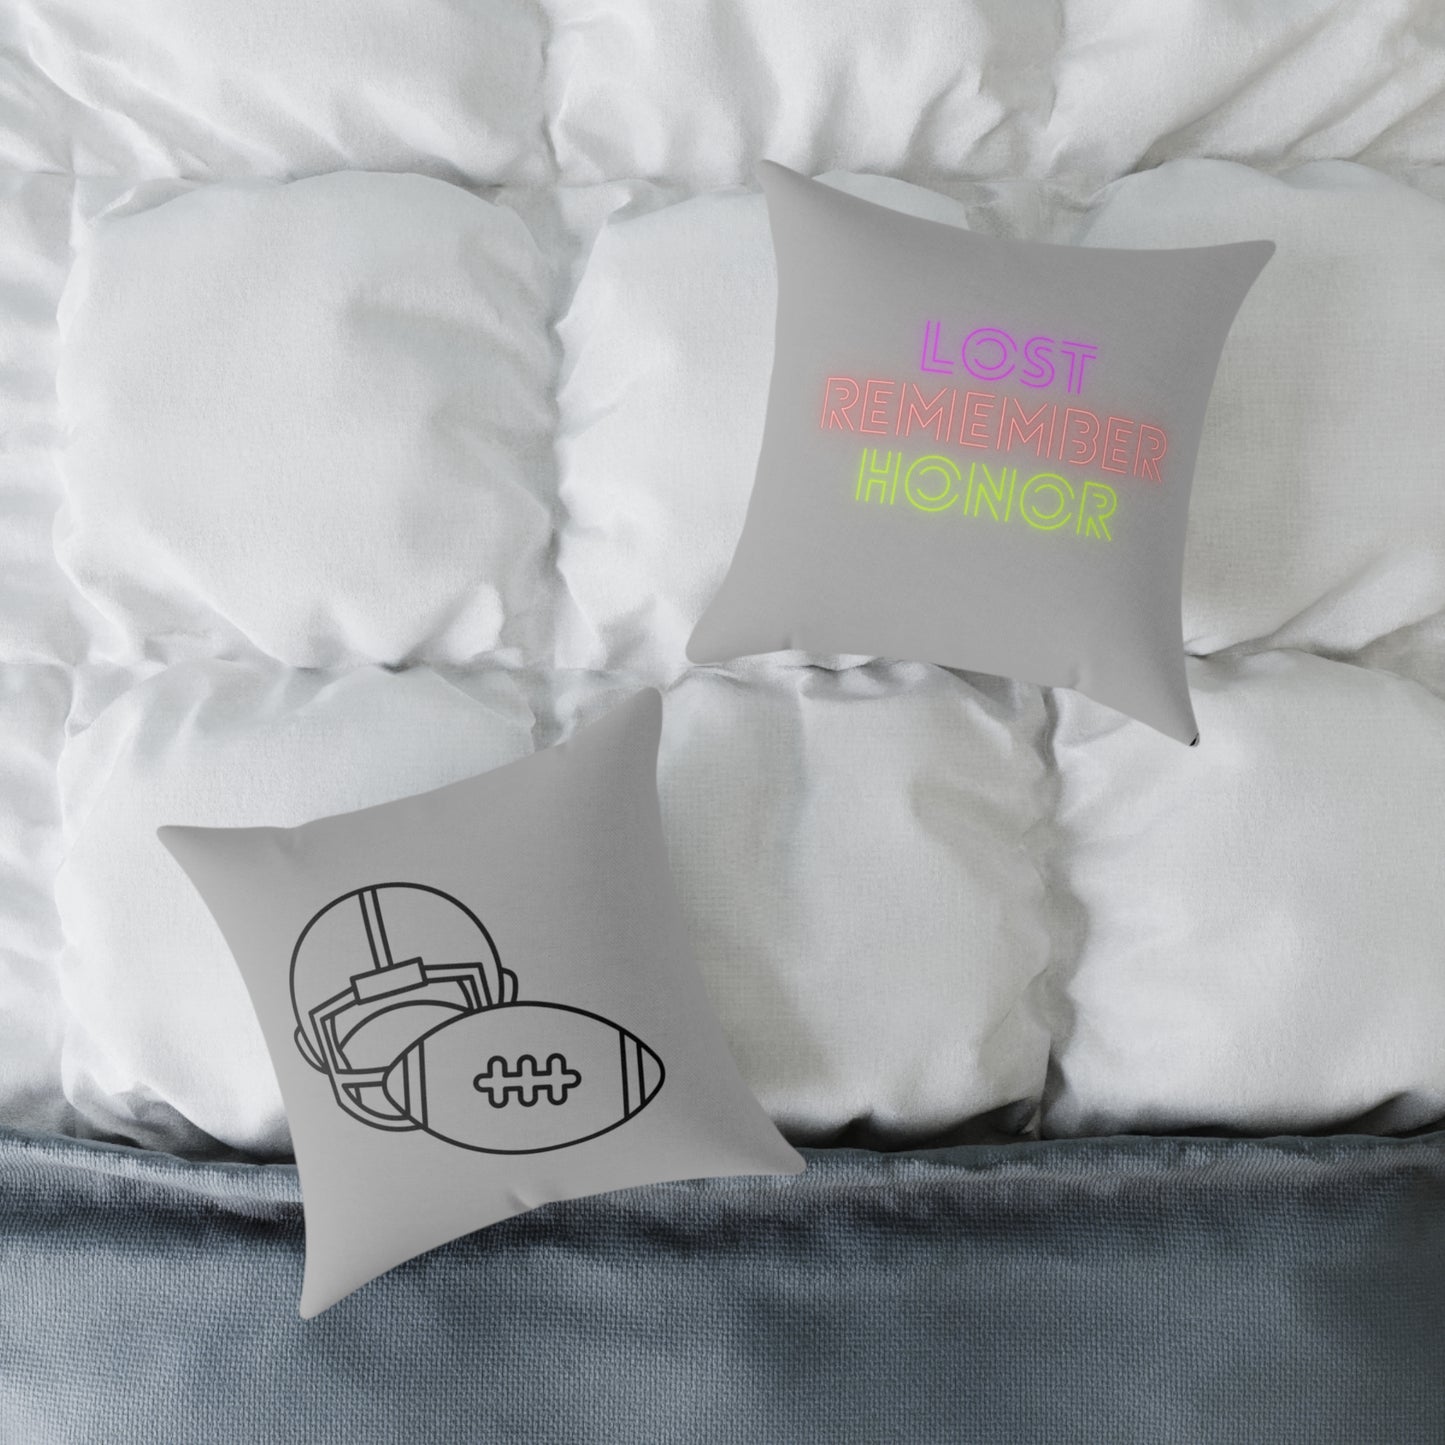 Spun Polyester Pillow: Football Lite Grey